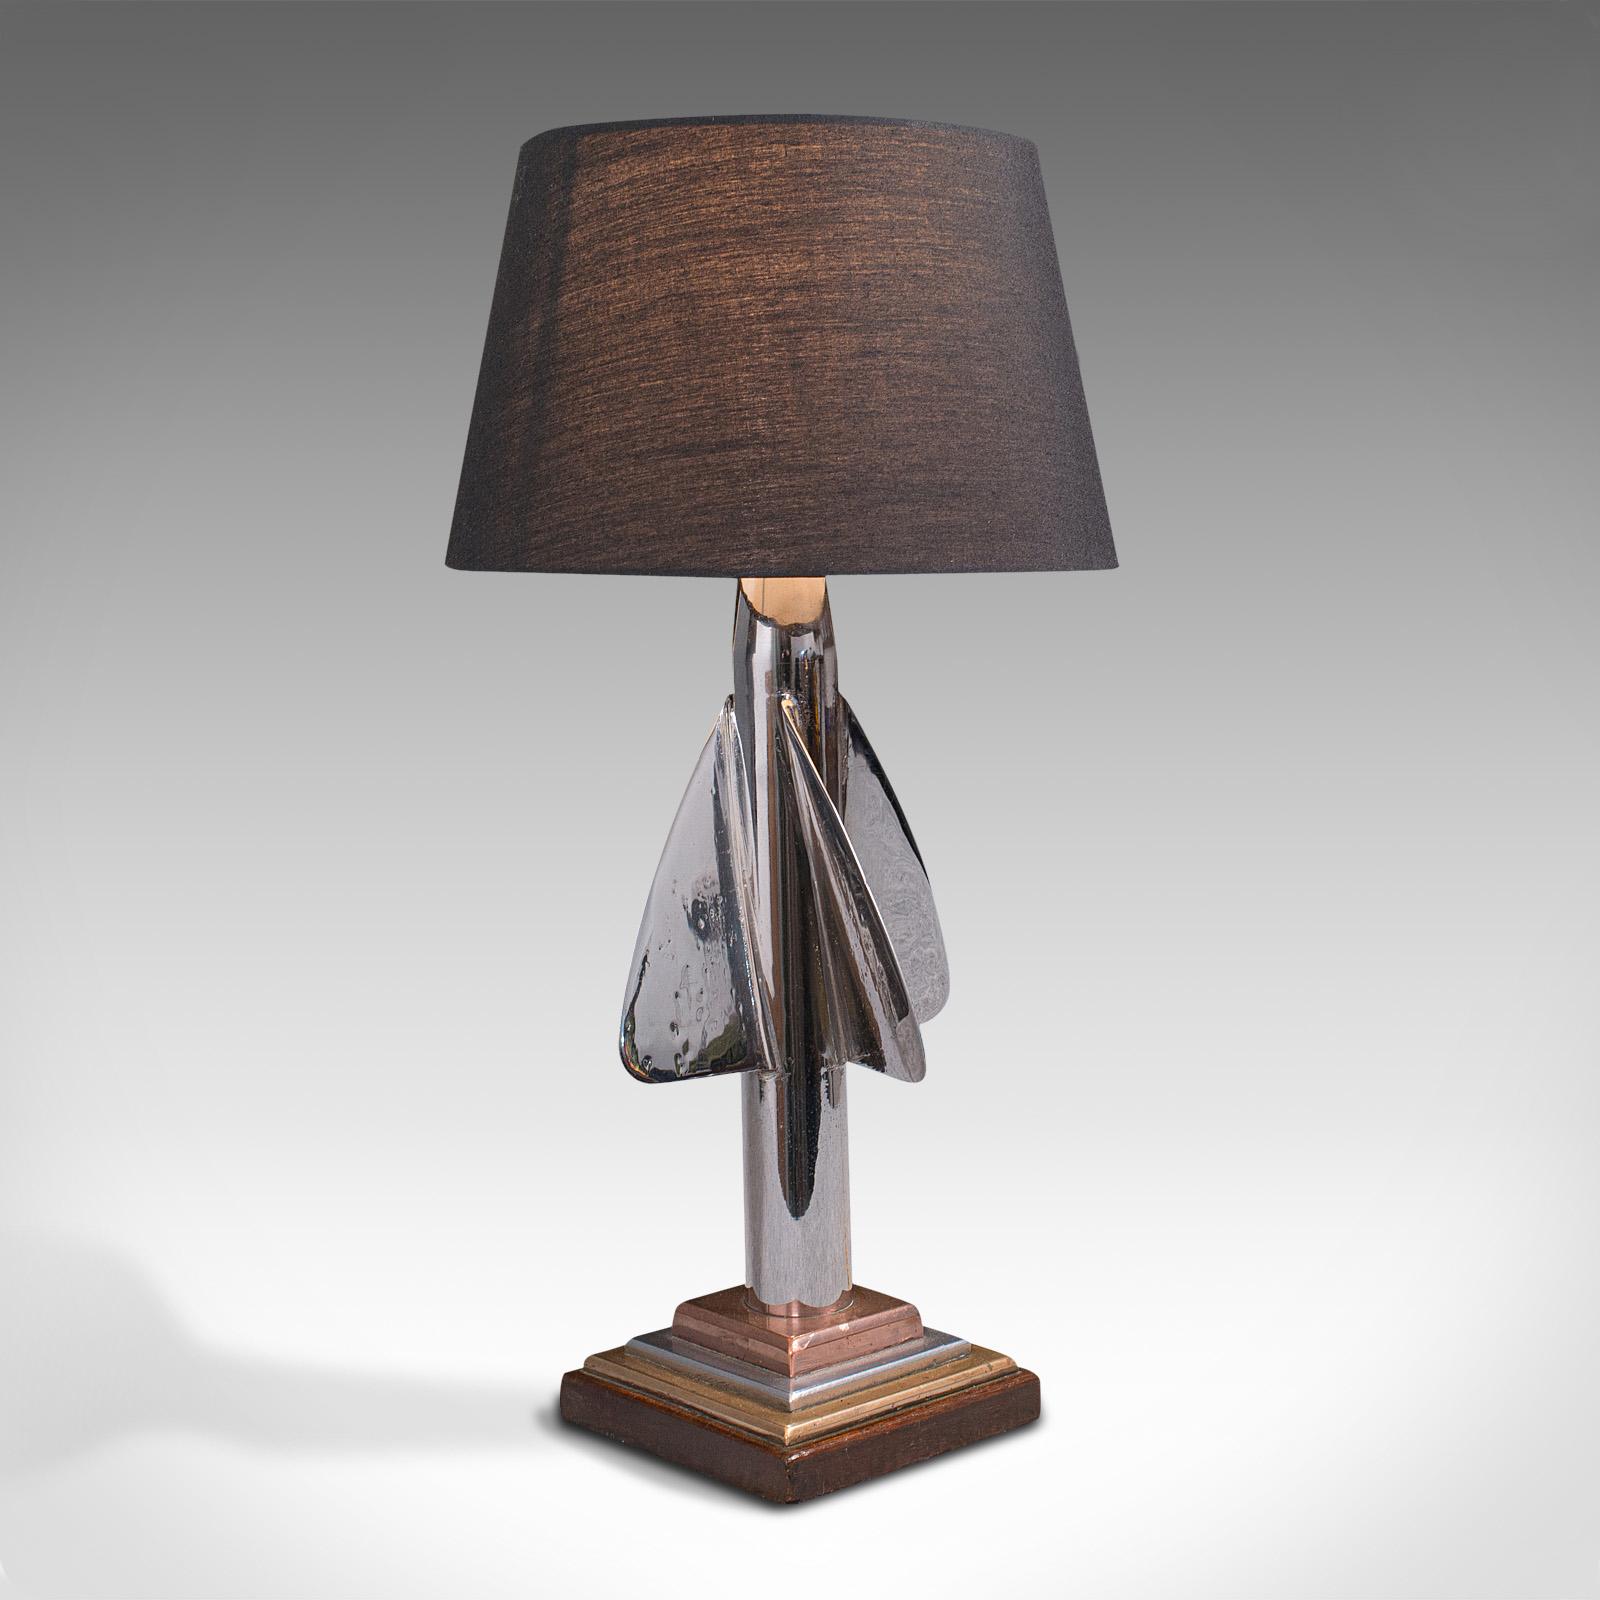 Pair of Vintage Maritime Desk Lamps, English, Ship's Log, Table Light, C.1930 For Sale 1